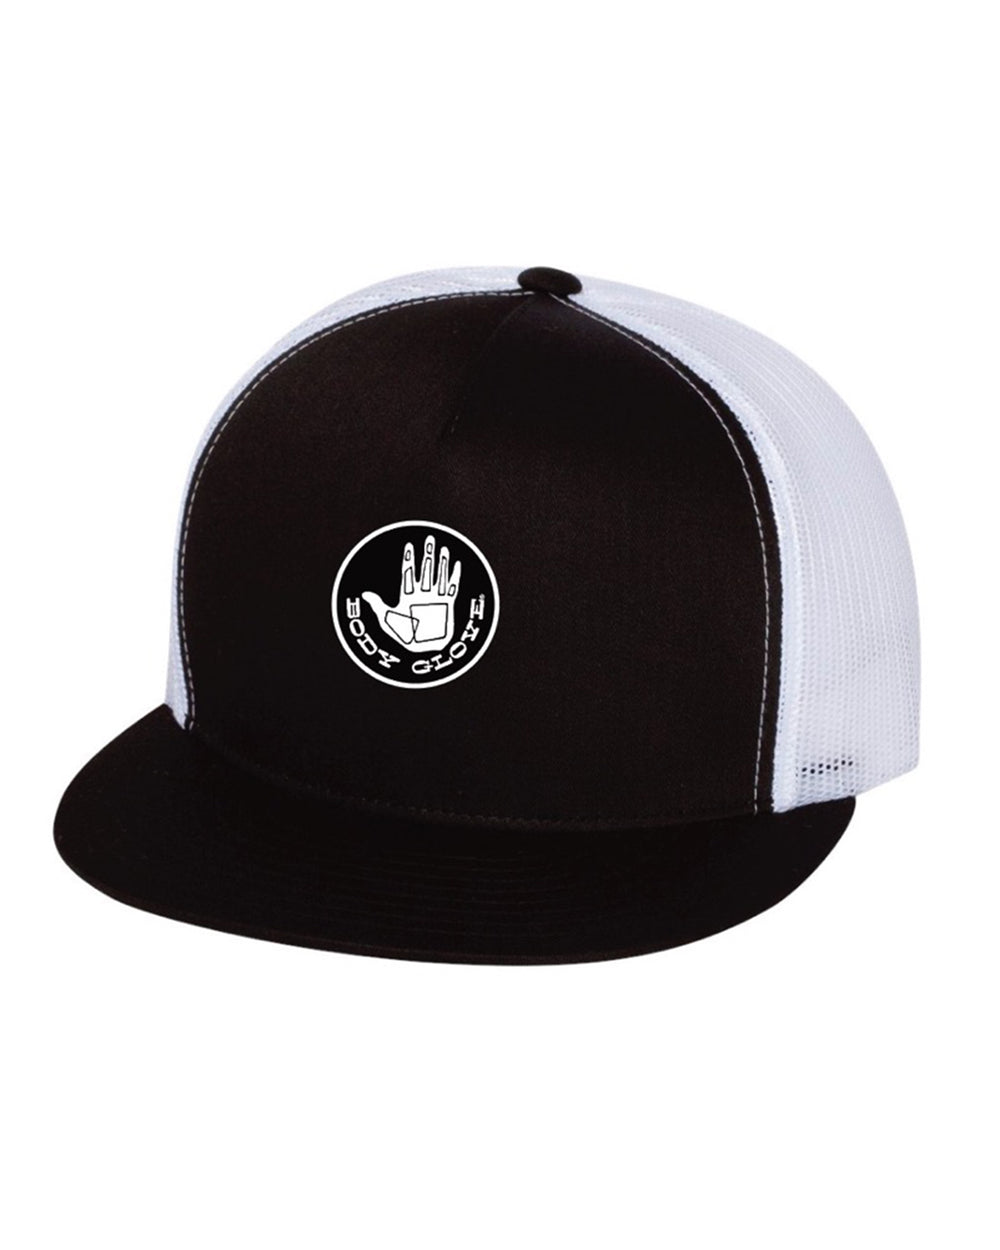 Limited-Edition Circle Logo Snapback Trucker Hat - Black/White